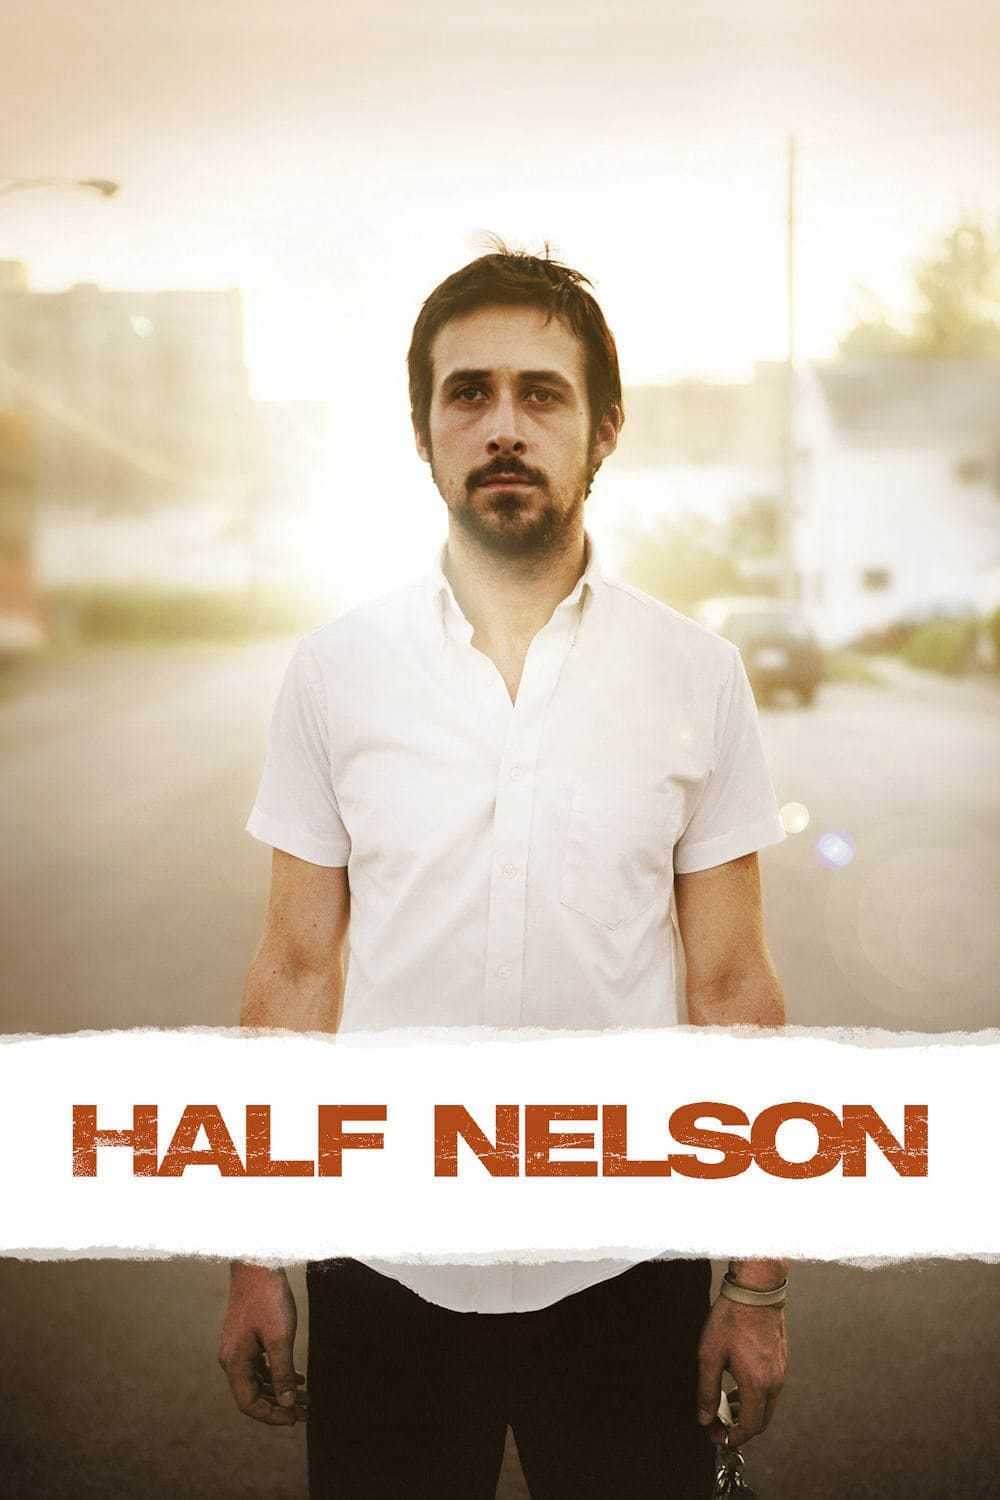 Half nelson - Half nelson